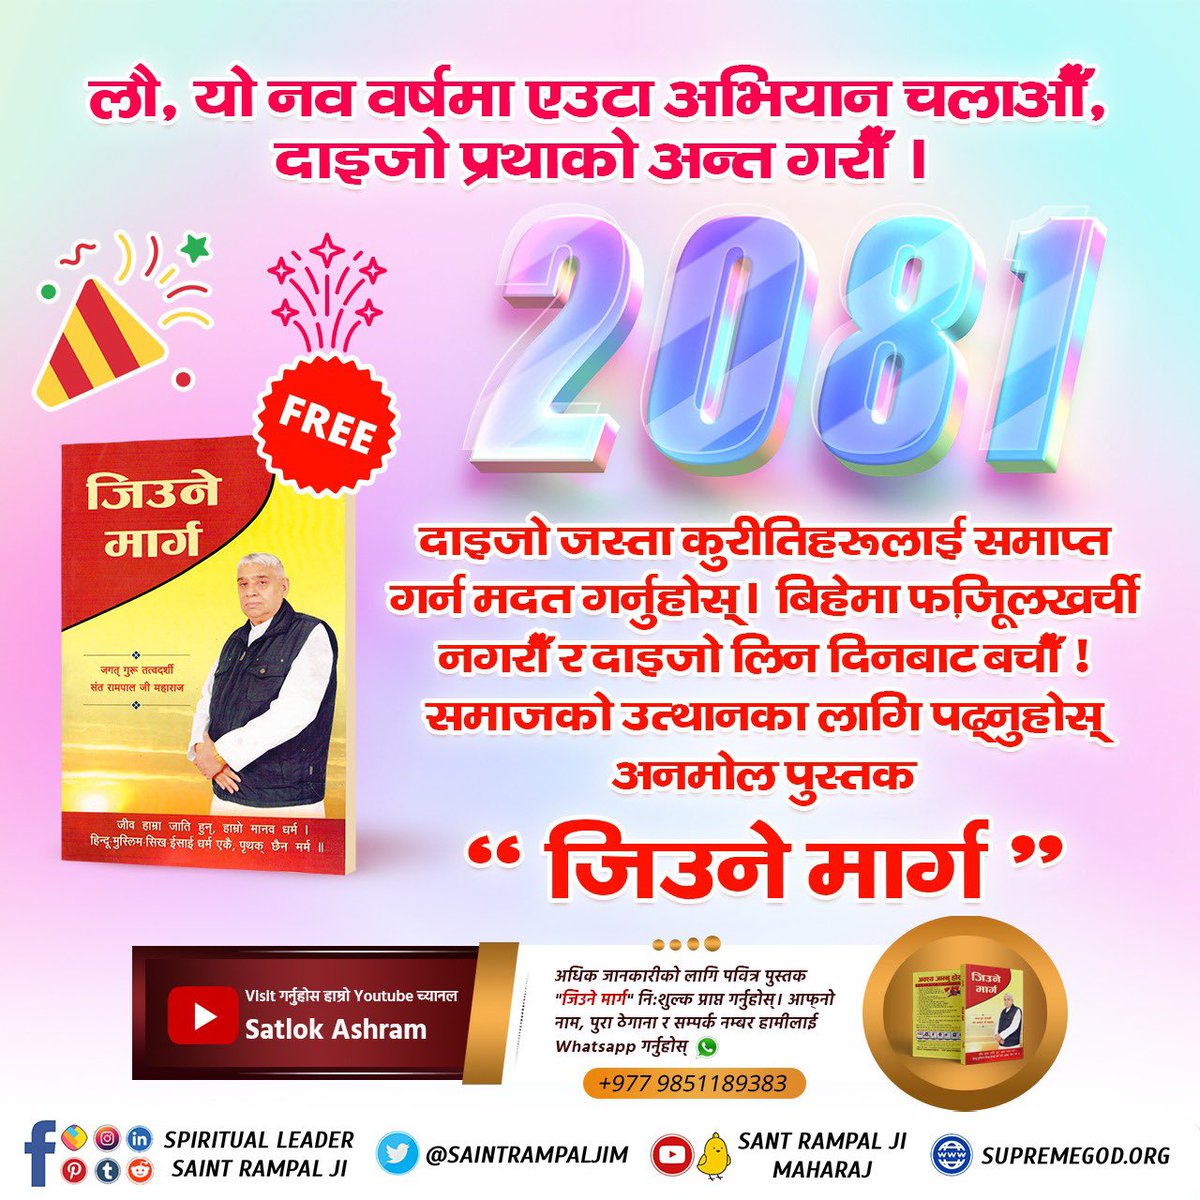 #नयाँवर्षमा_जीवनको_नयाँयात्रा
 Let's make this new year meaningful by acquiring the knowledge of all scriptures. Get Free Spiritual Book “Gyan Ganga” written by World Spiritual Leader Sant Rampal Ji Maharaj.